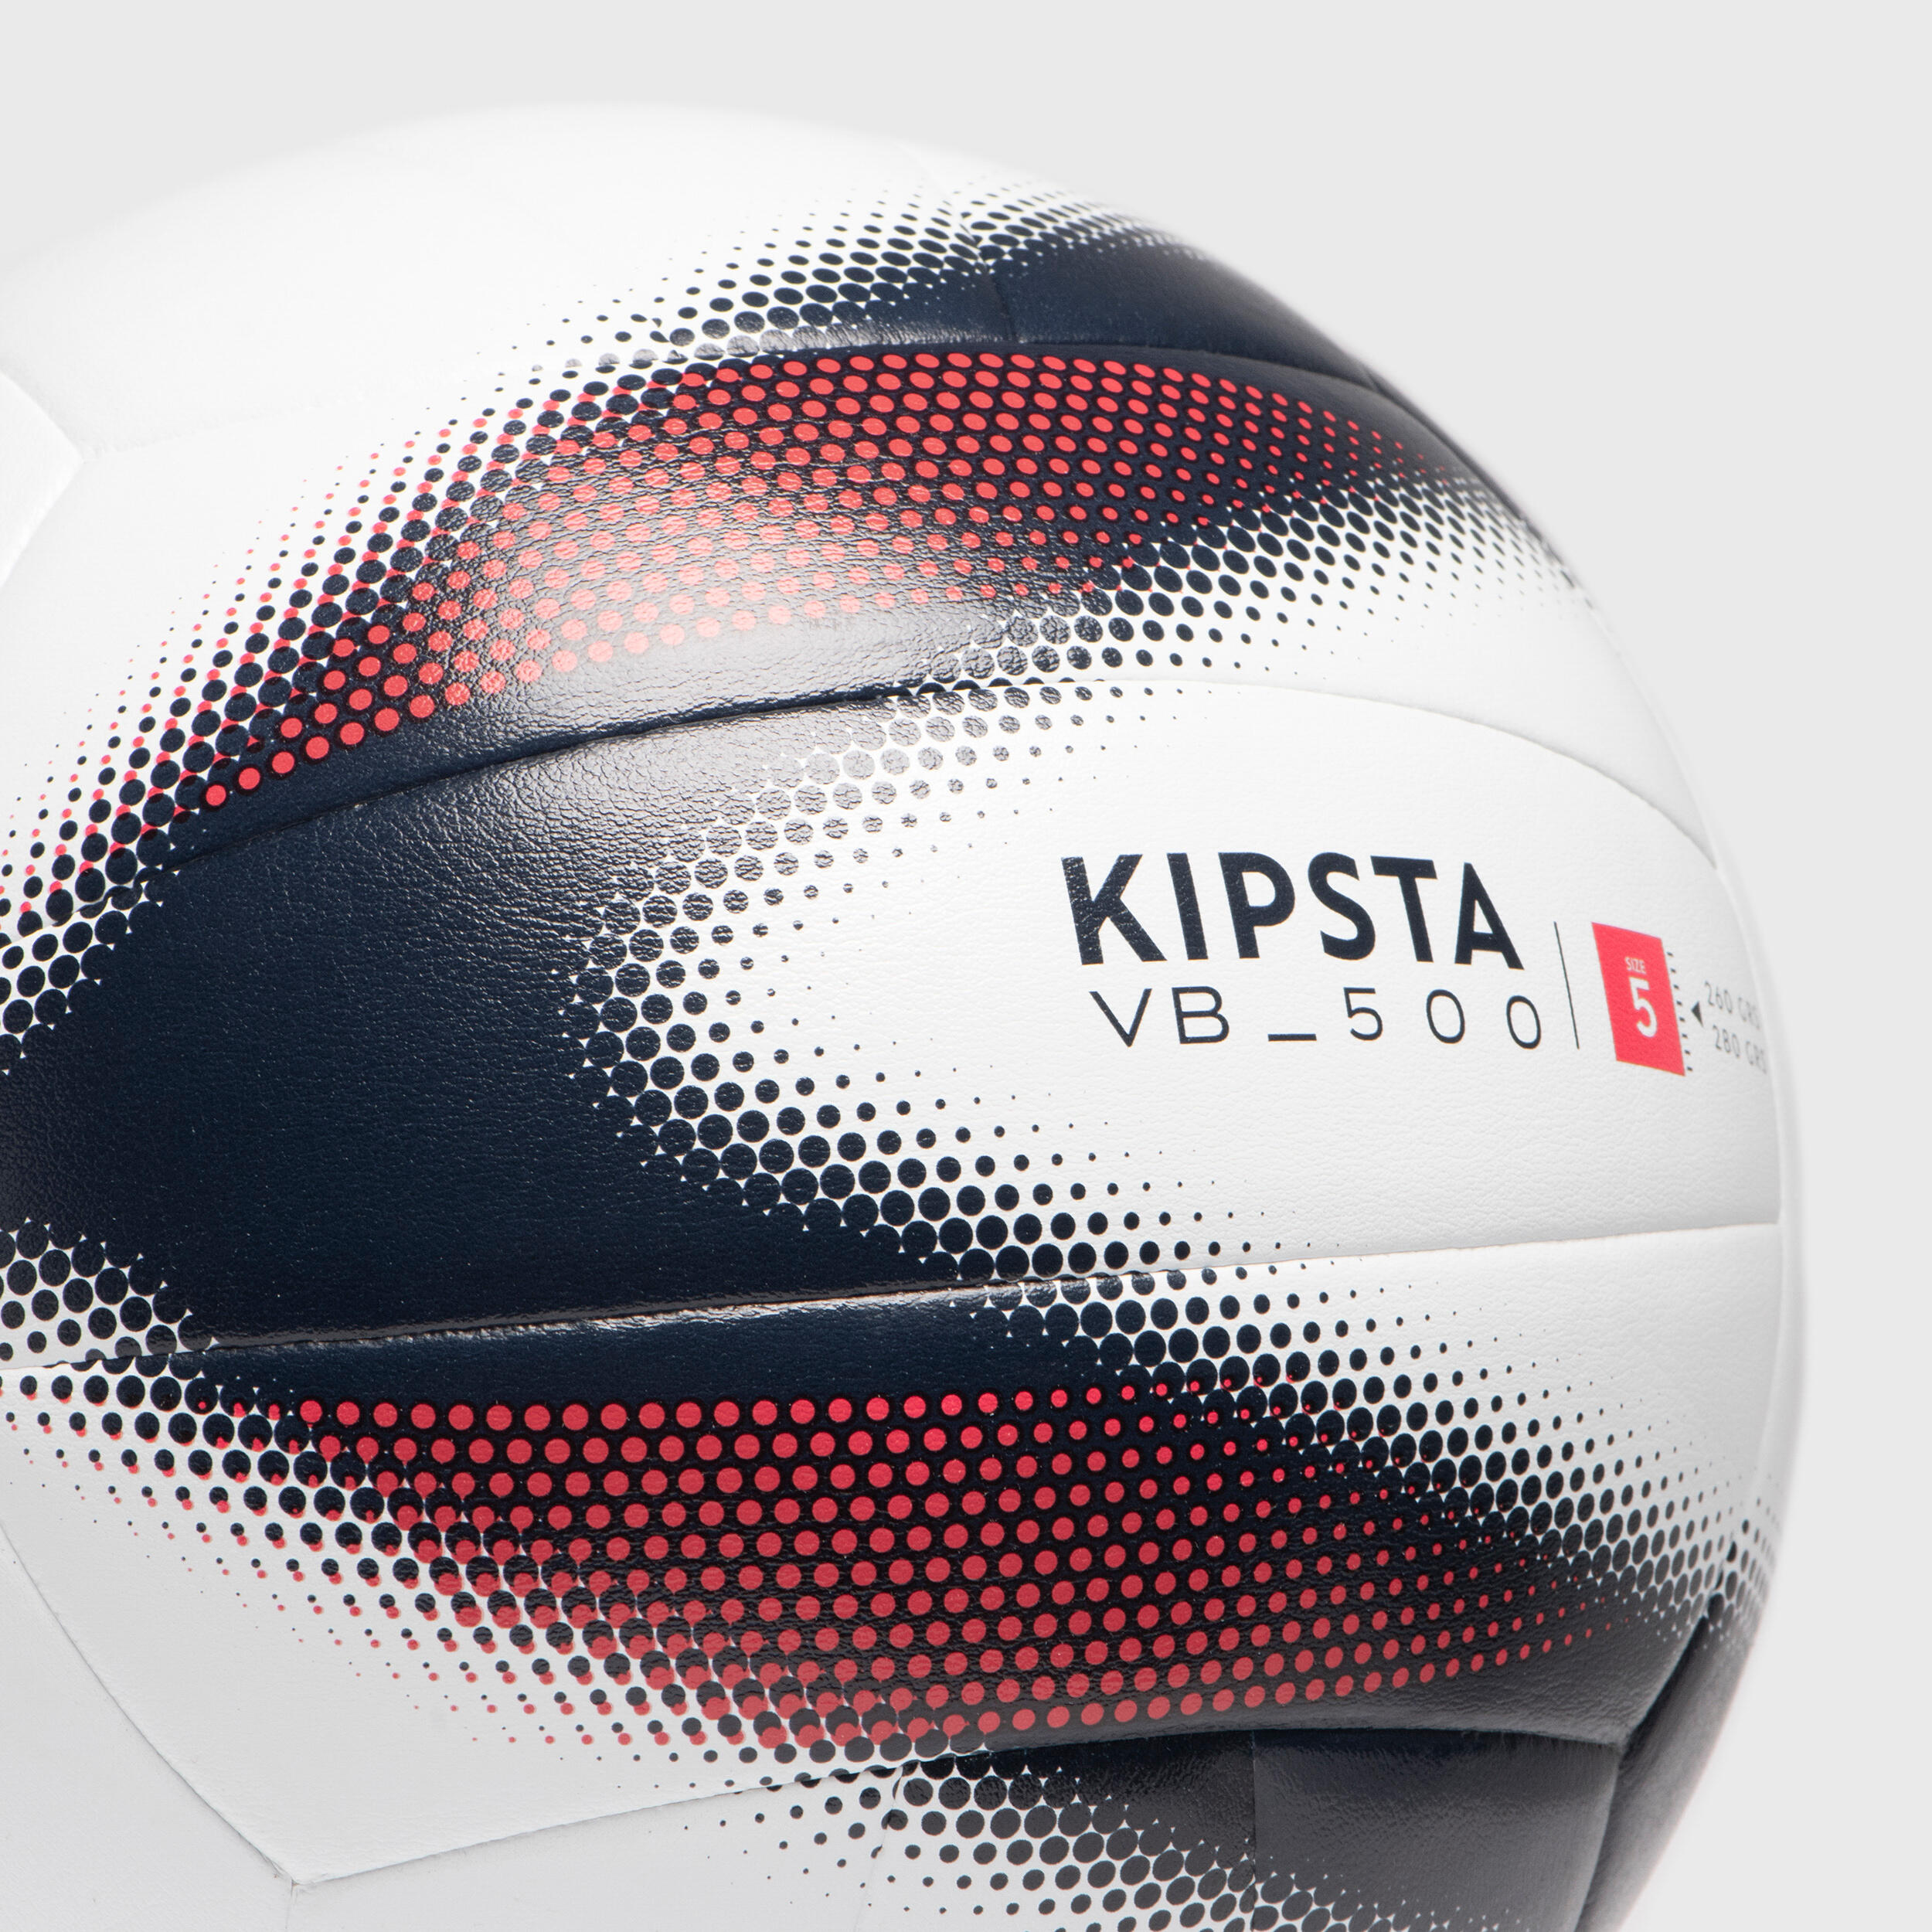 Size 5 Volleyball Ball - VB 500 Grey - Foggy blue - Kipsta - Decathlon